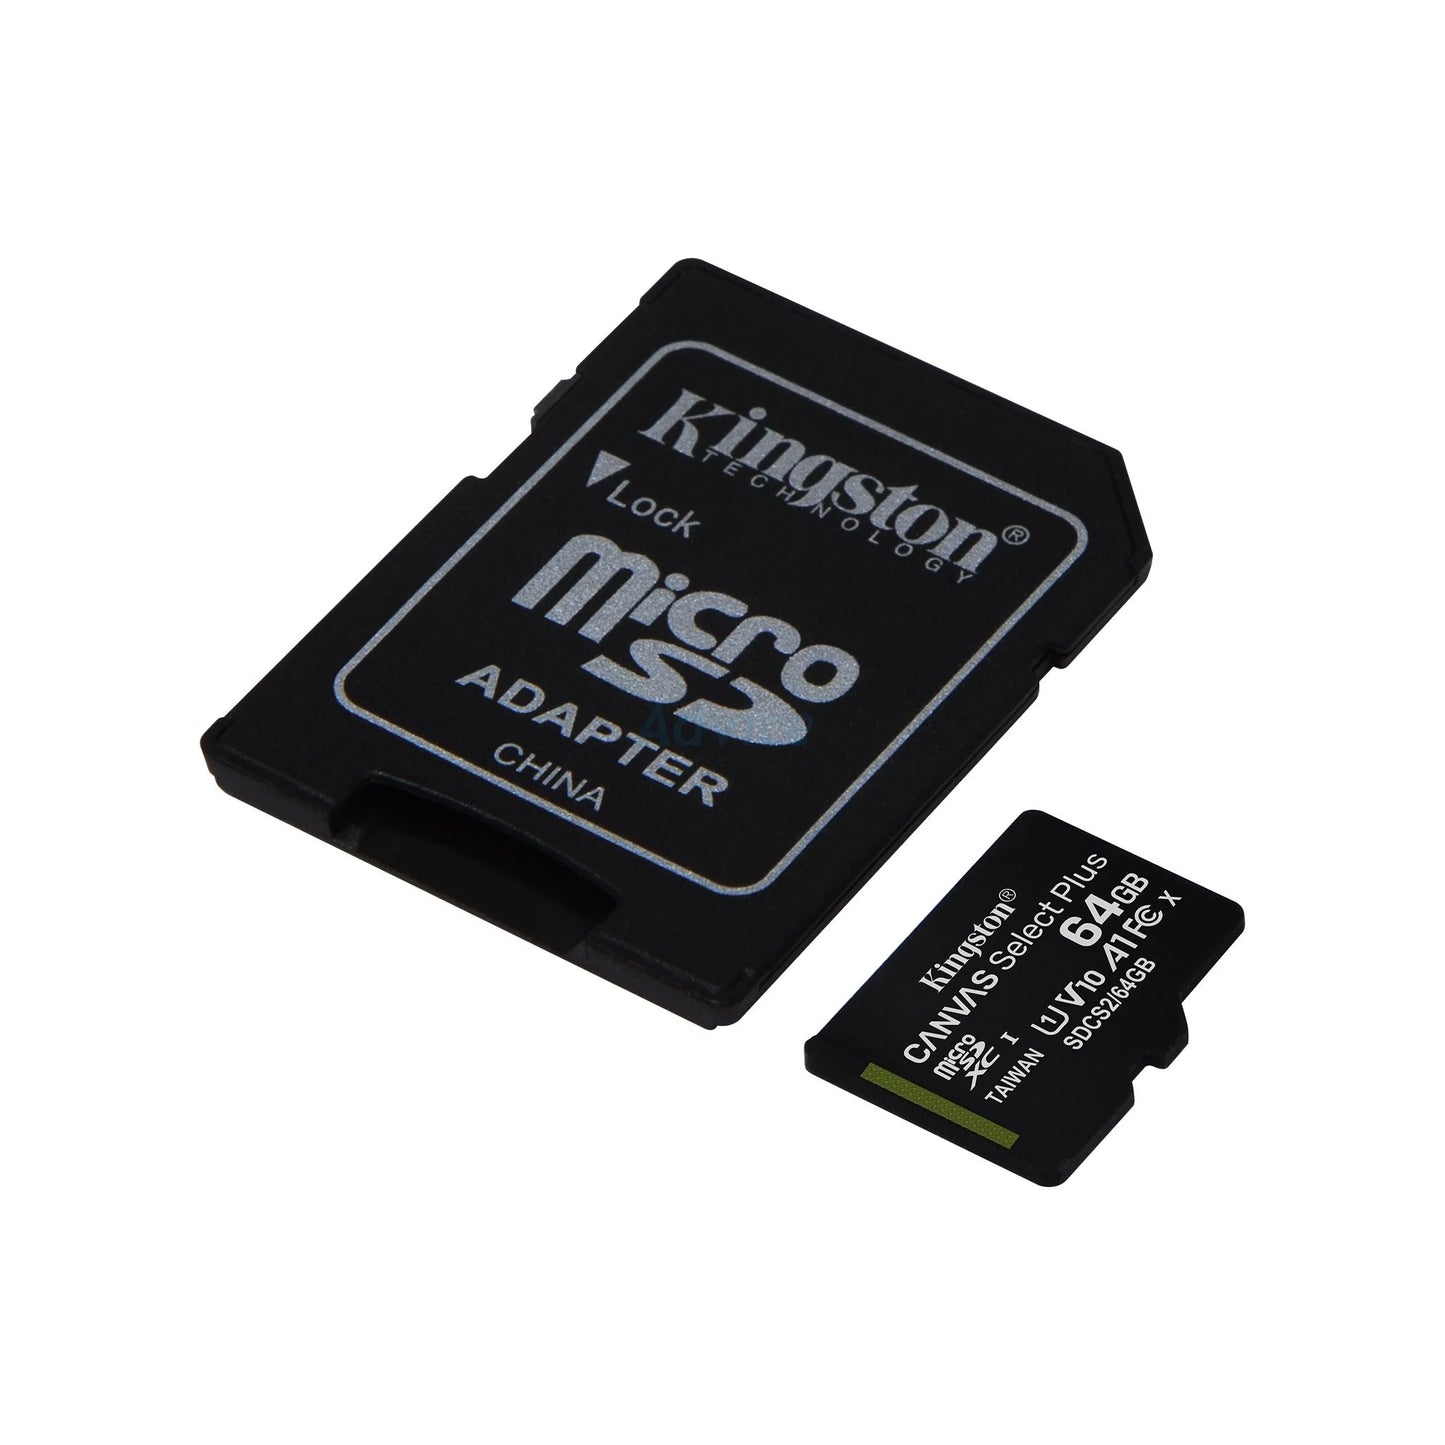 64GB Micro SD Card Kingston Canvas Select Plus SDCS2